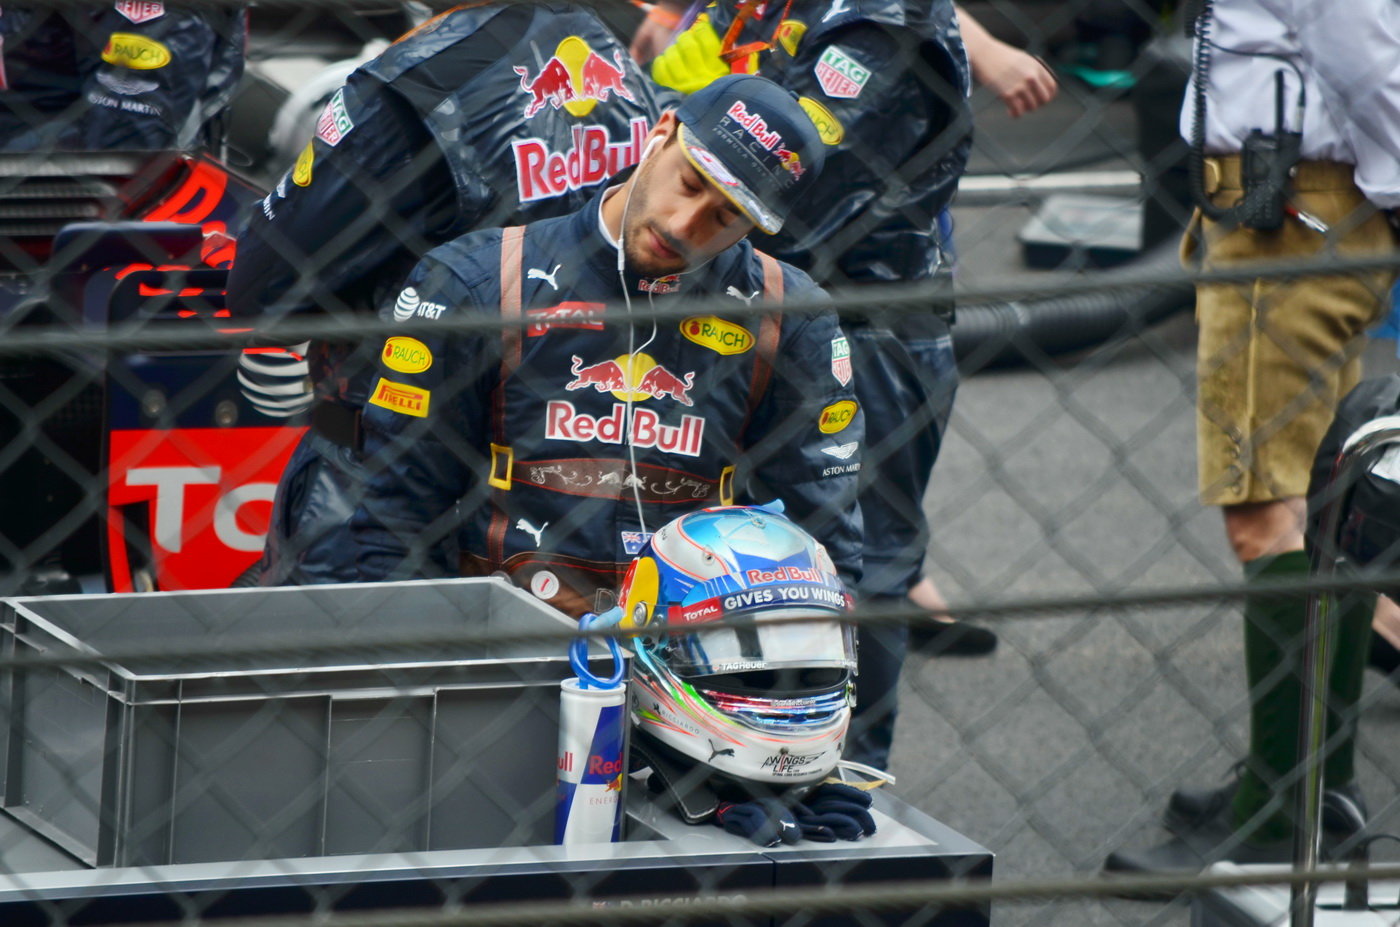 Daniel Ricciardo před startem GP Rakouska (Red Bull Ring) poslouchal hudbu a tančil na startovním rostu.